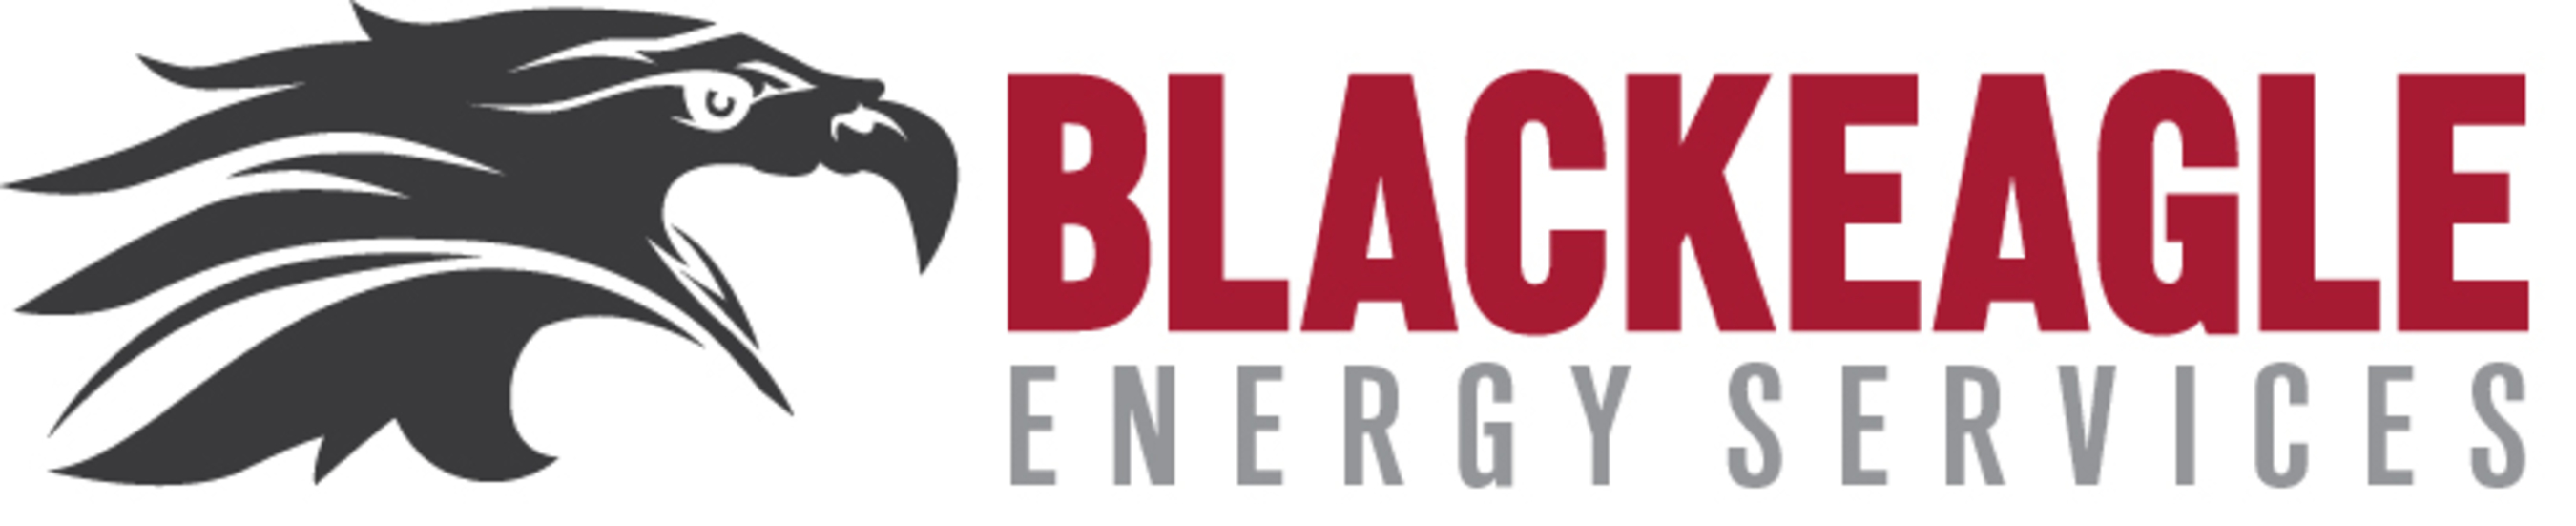 Blackeagle Logo